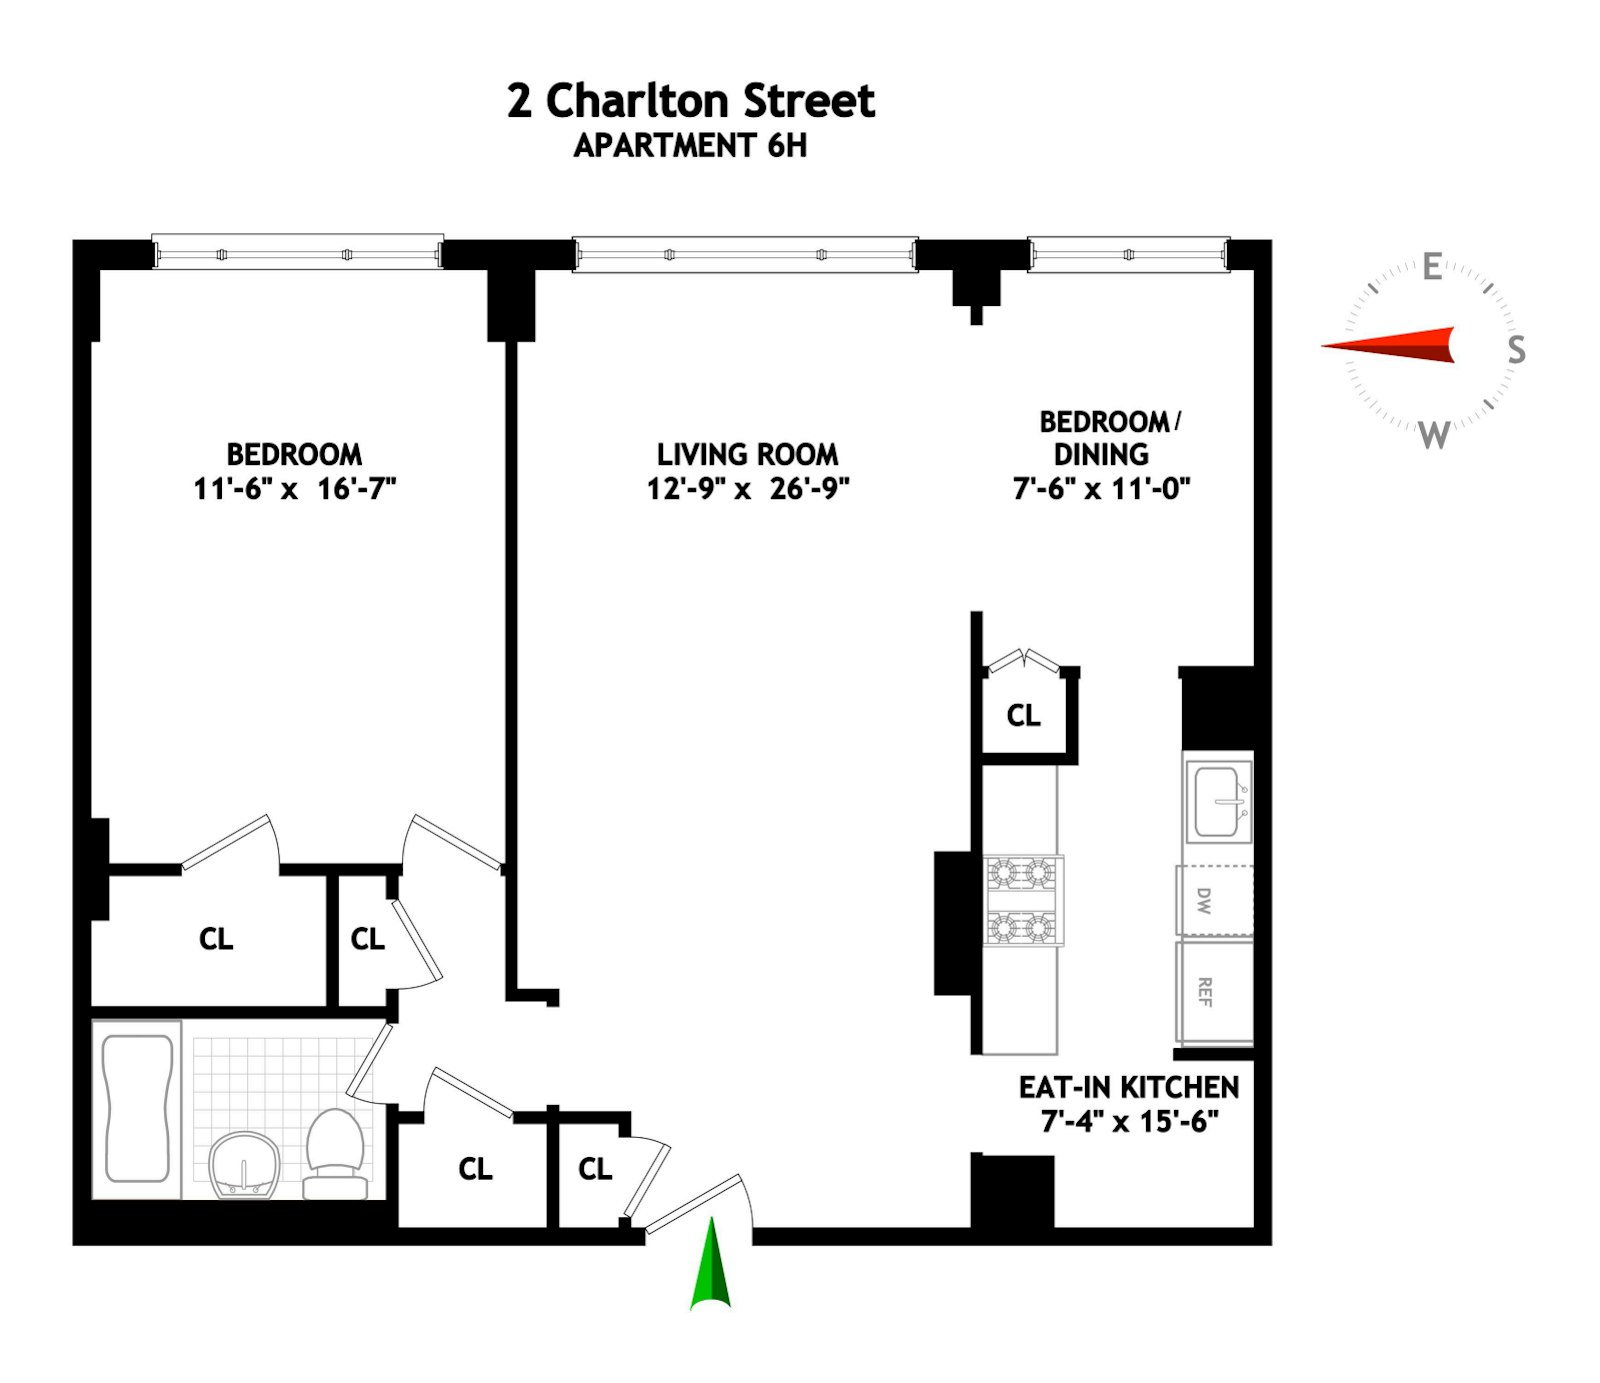 Floorplan for 2 Charlton Street, 6H